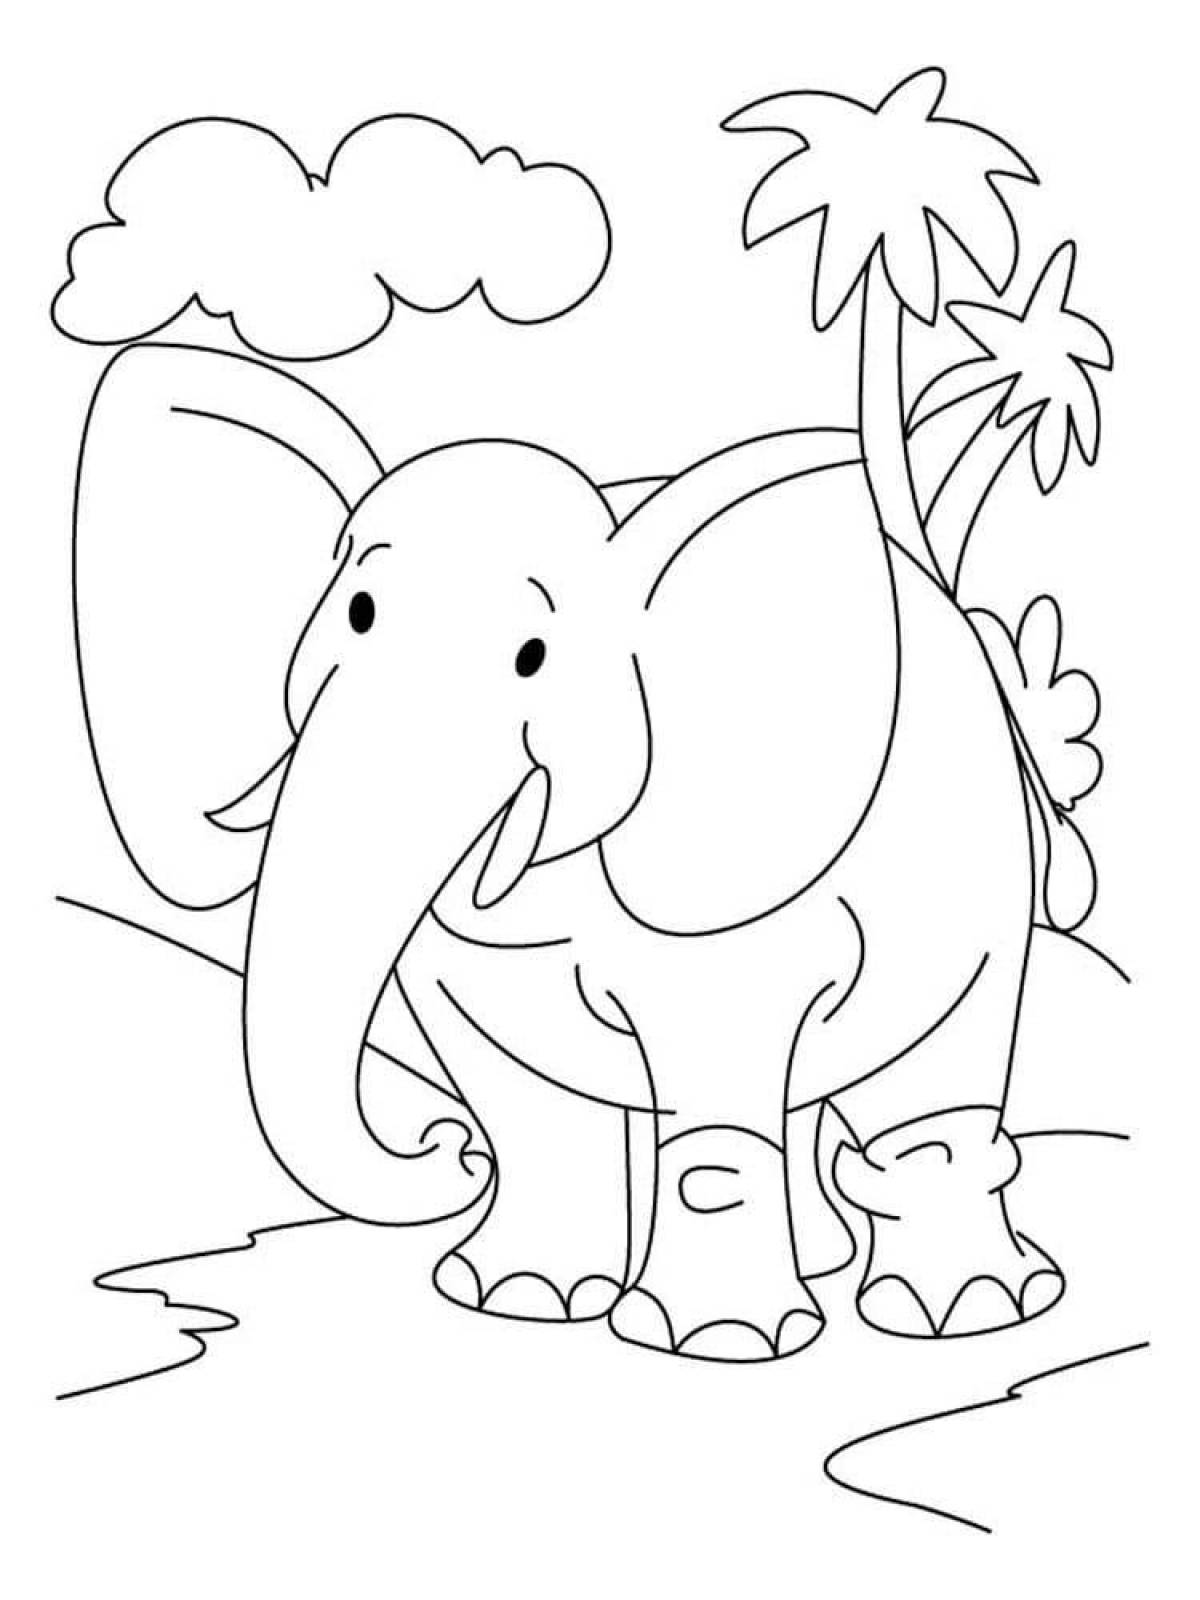 Exquisite elephant coloring